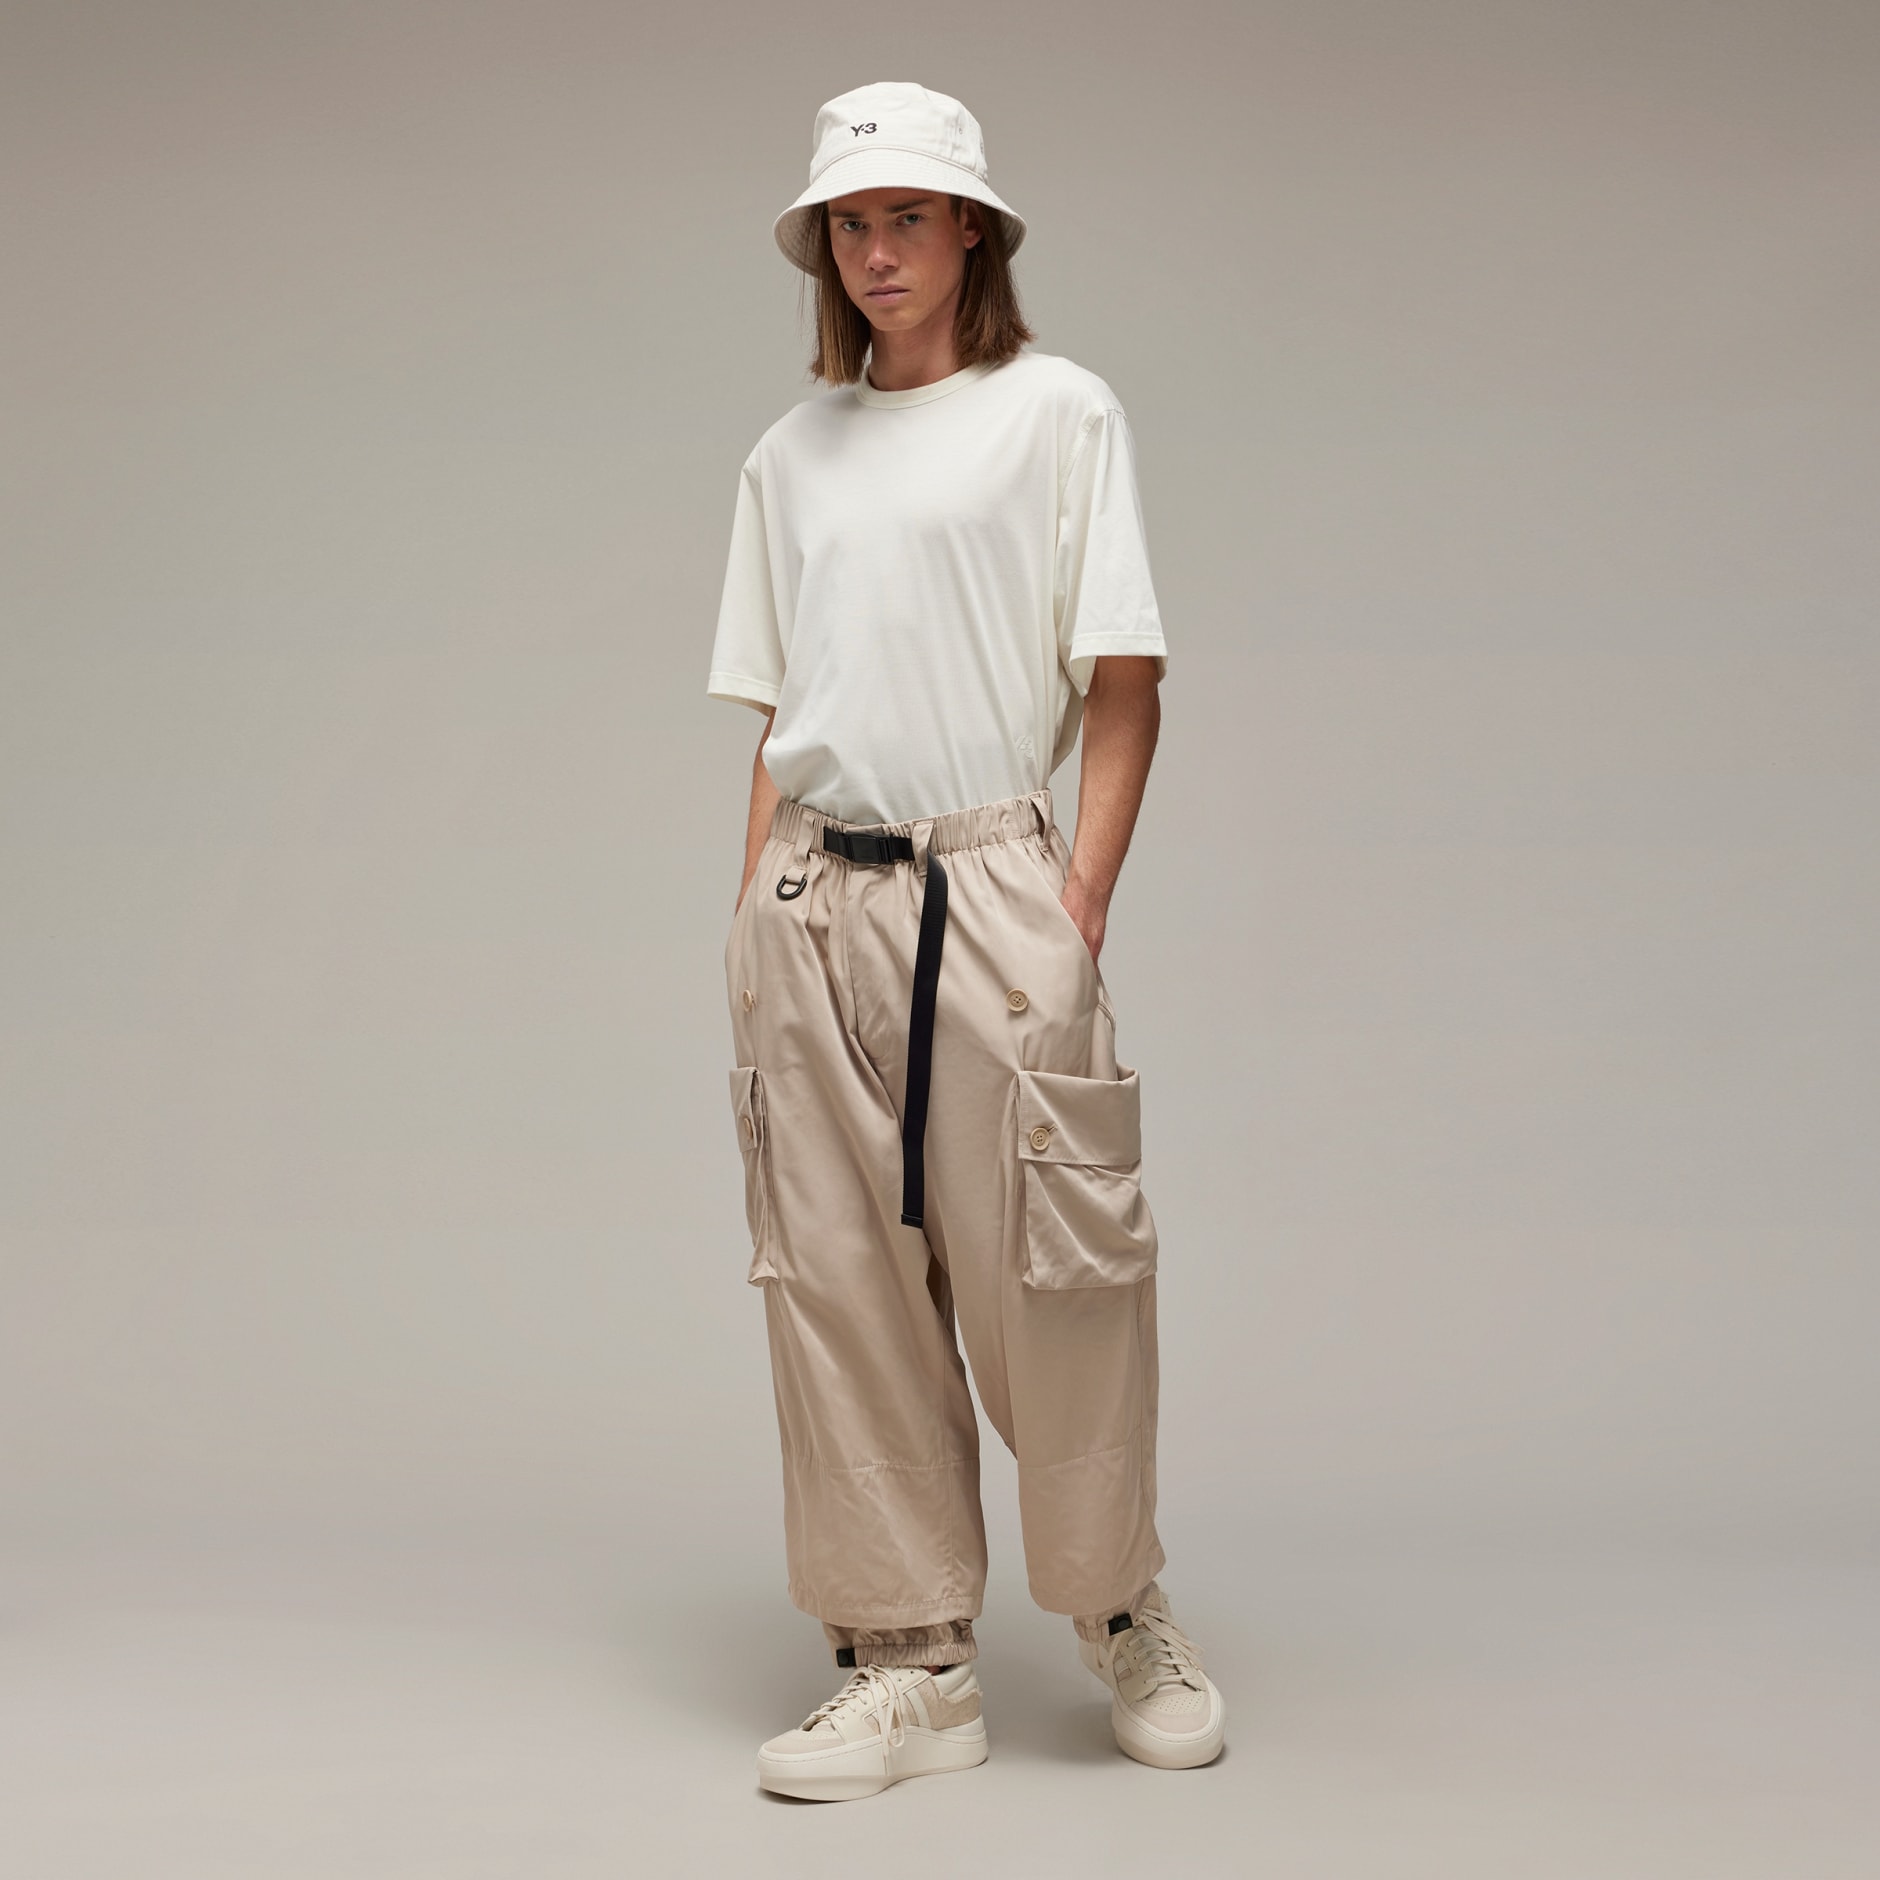 adidas Y-3 Crinkle Nylon Pants - Brown, Men's Lifestyle